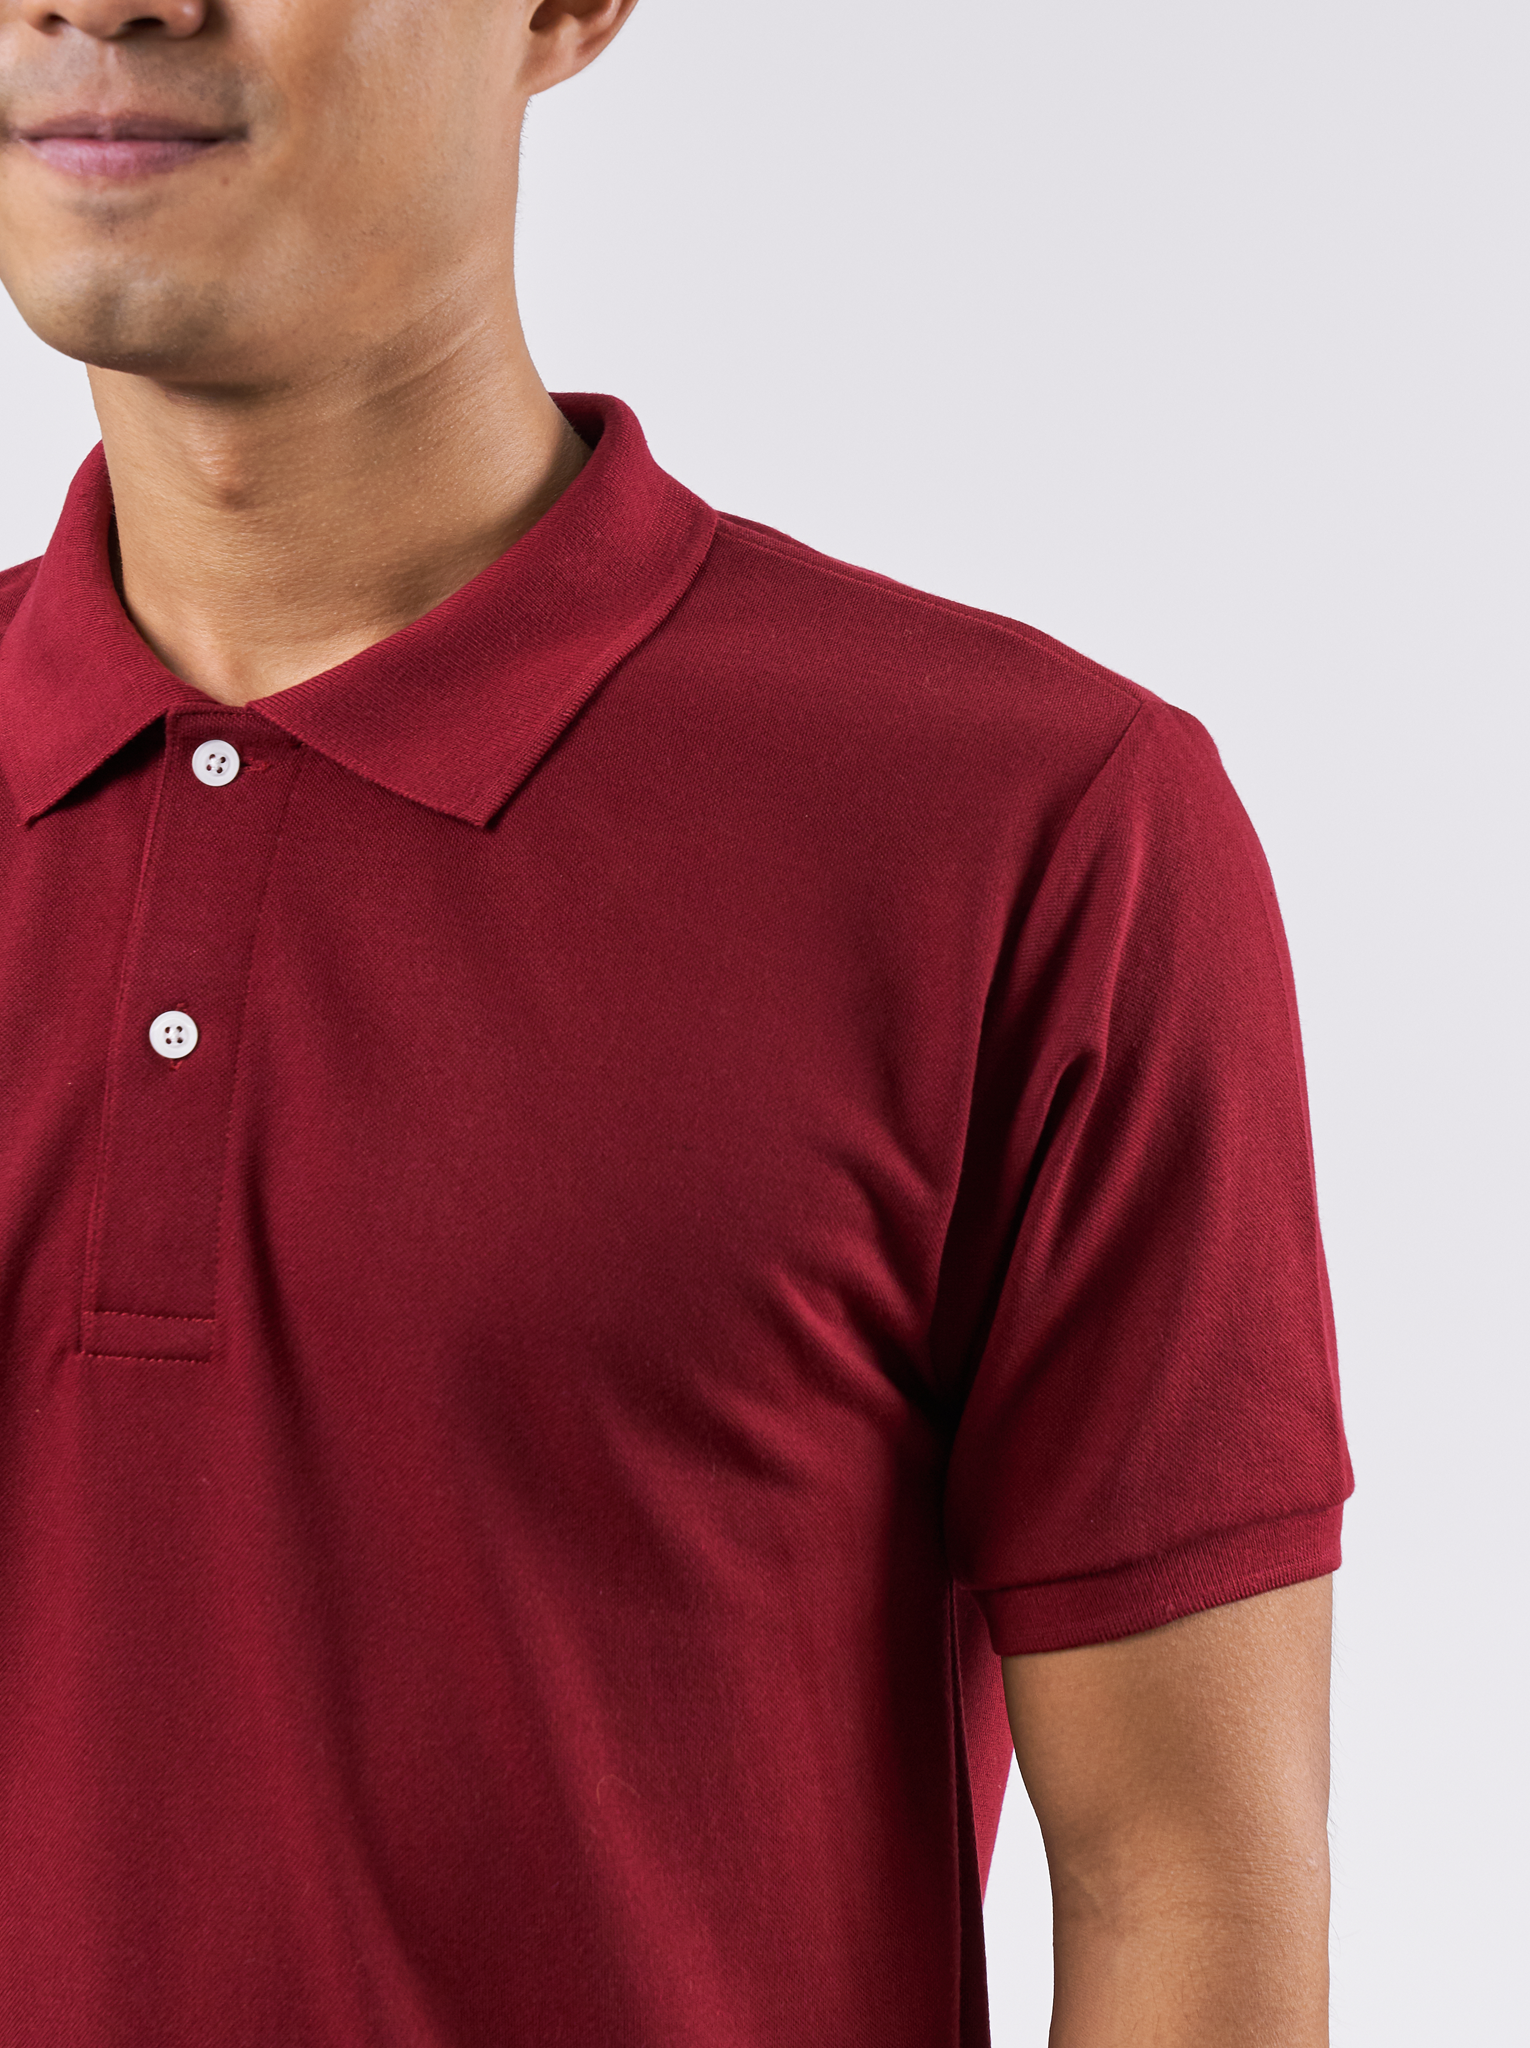 Polo Shirt เสื้อโปโล (Scarlet Red, สีแดงเลือดหมู)(Unisex)